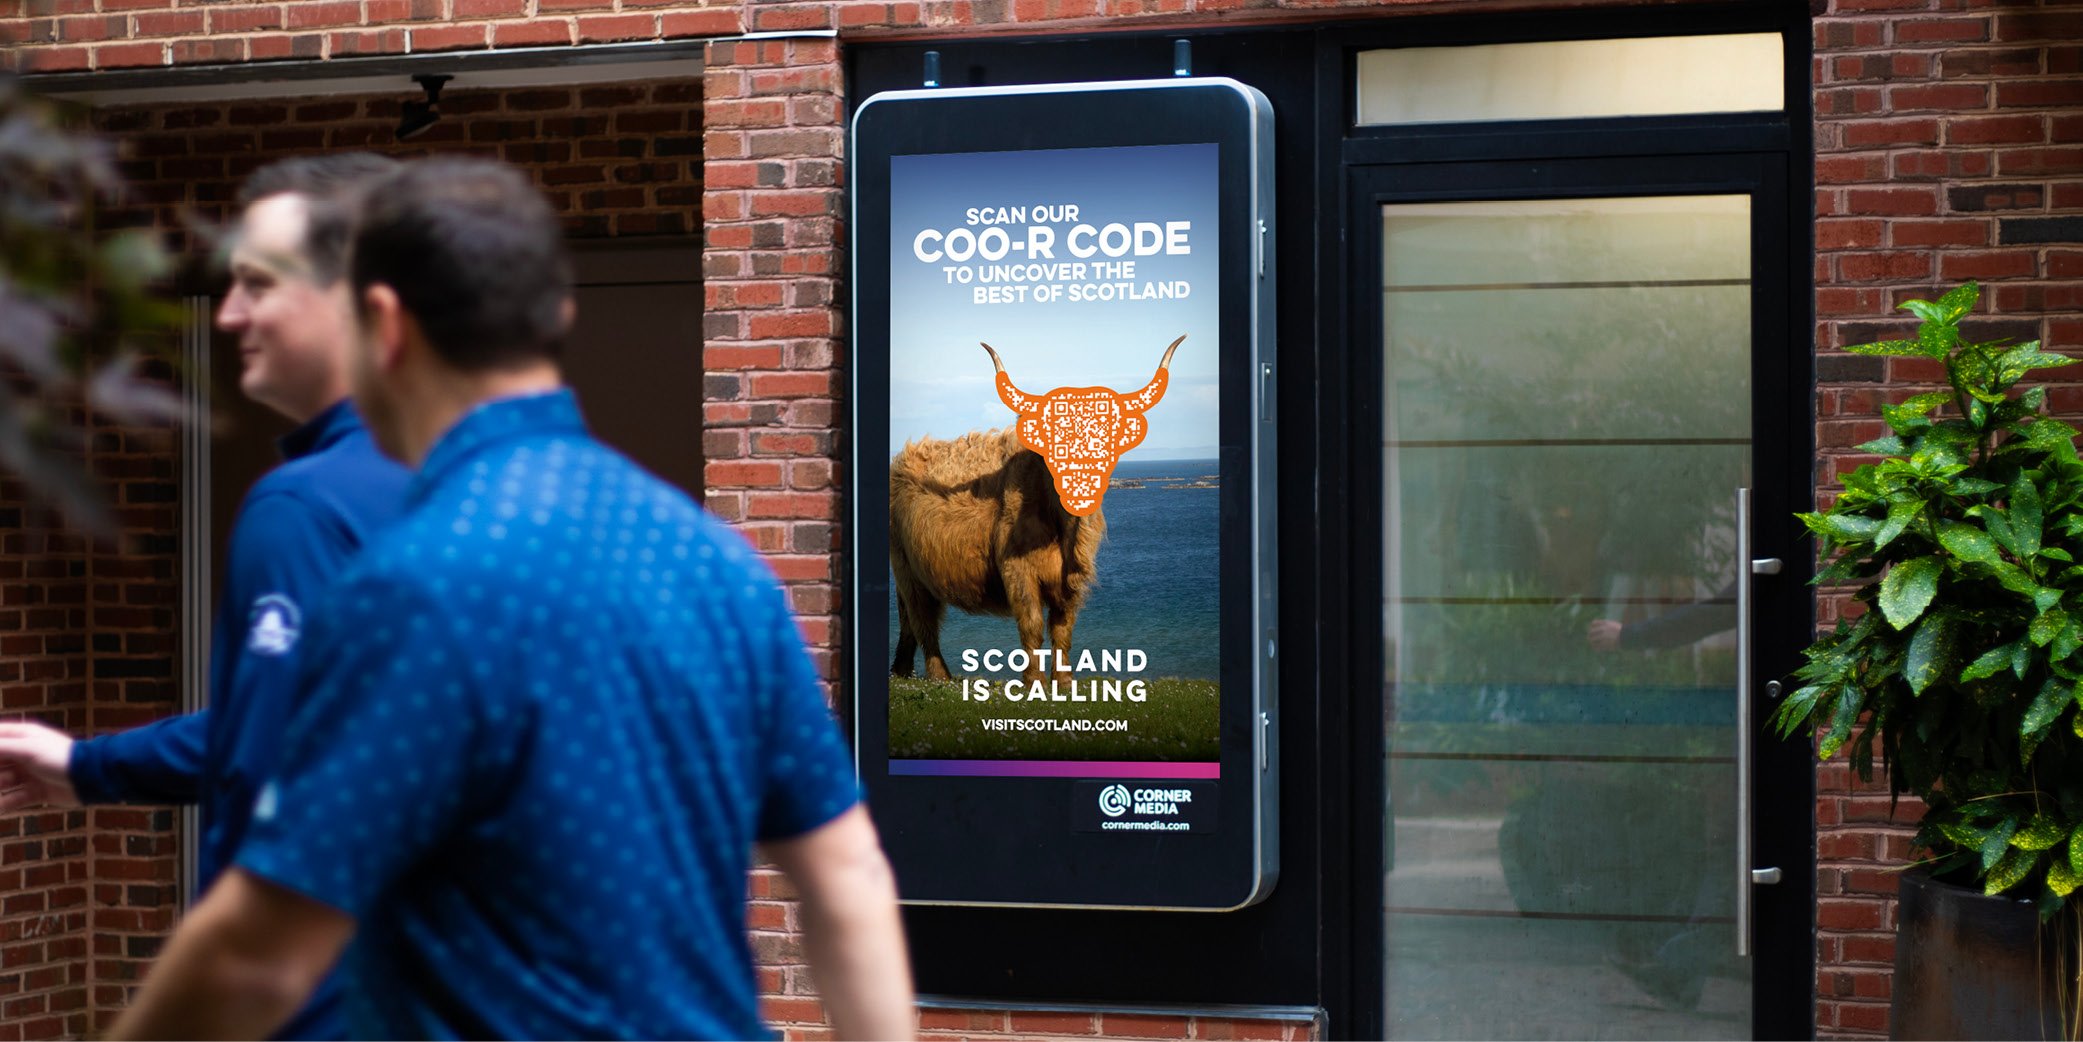 Scotland QR Code DOOH ad